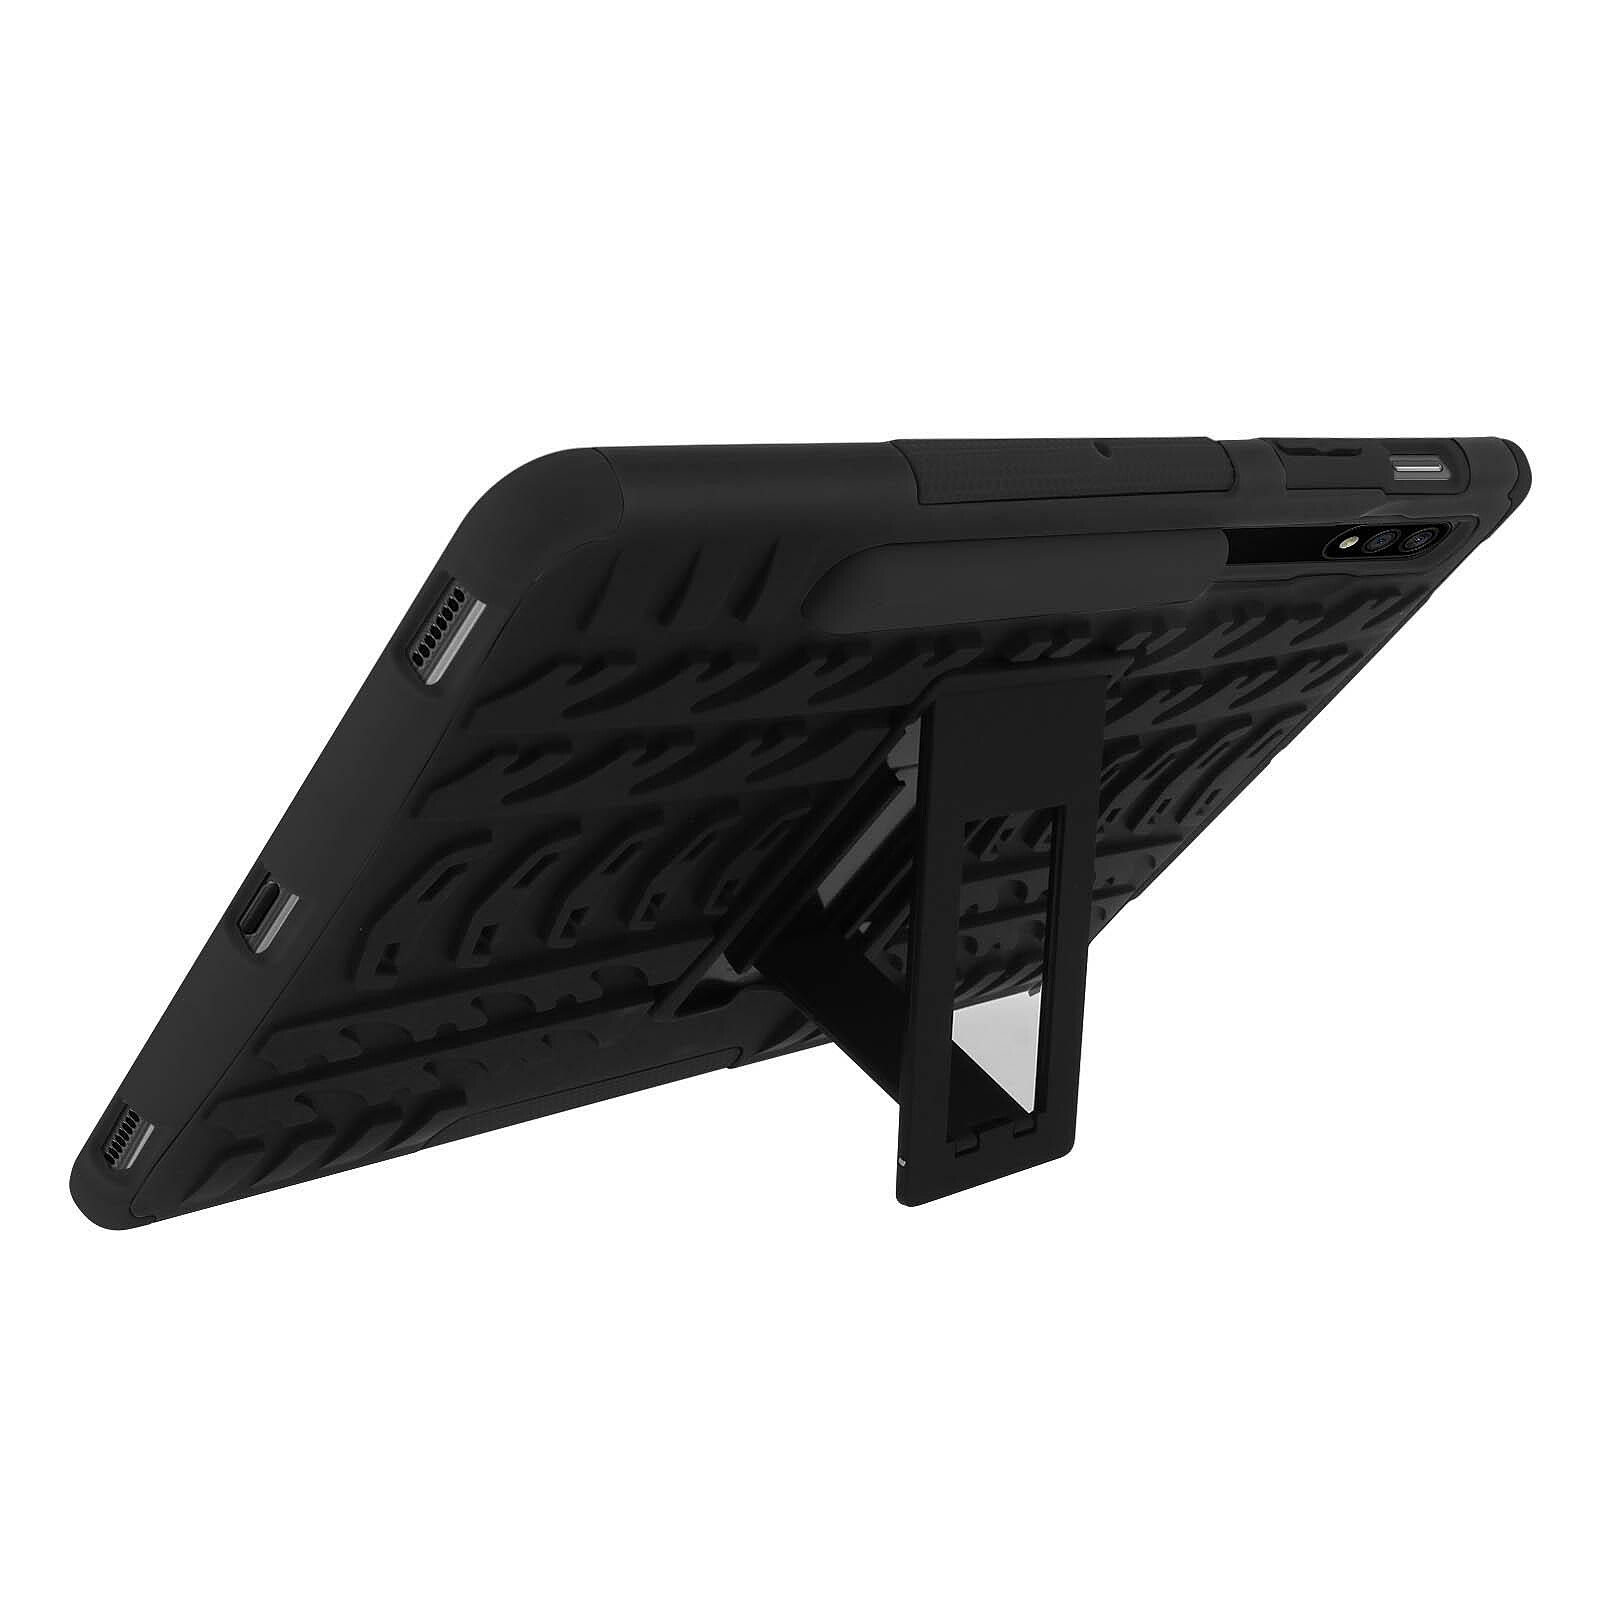 Acheter Kit Bluetooth voiture pour Samsung Galaxy Tab S7 Plus 12.4